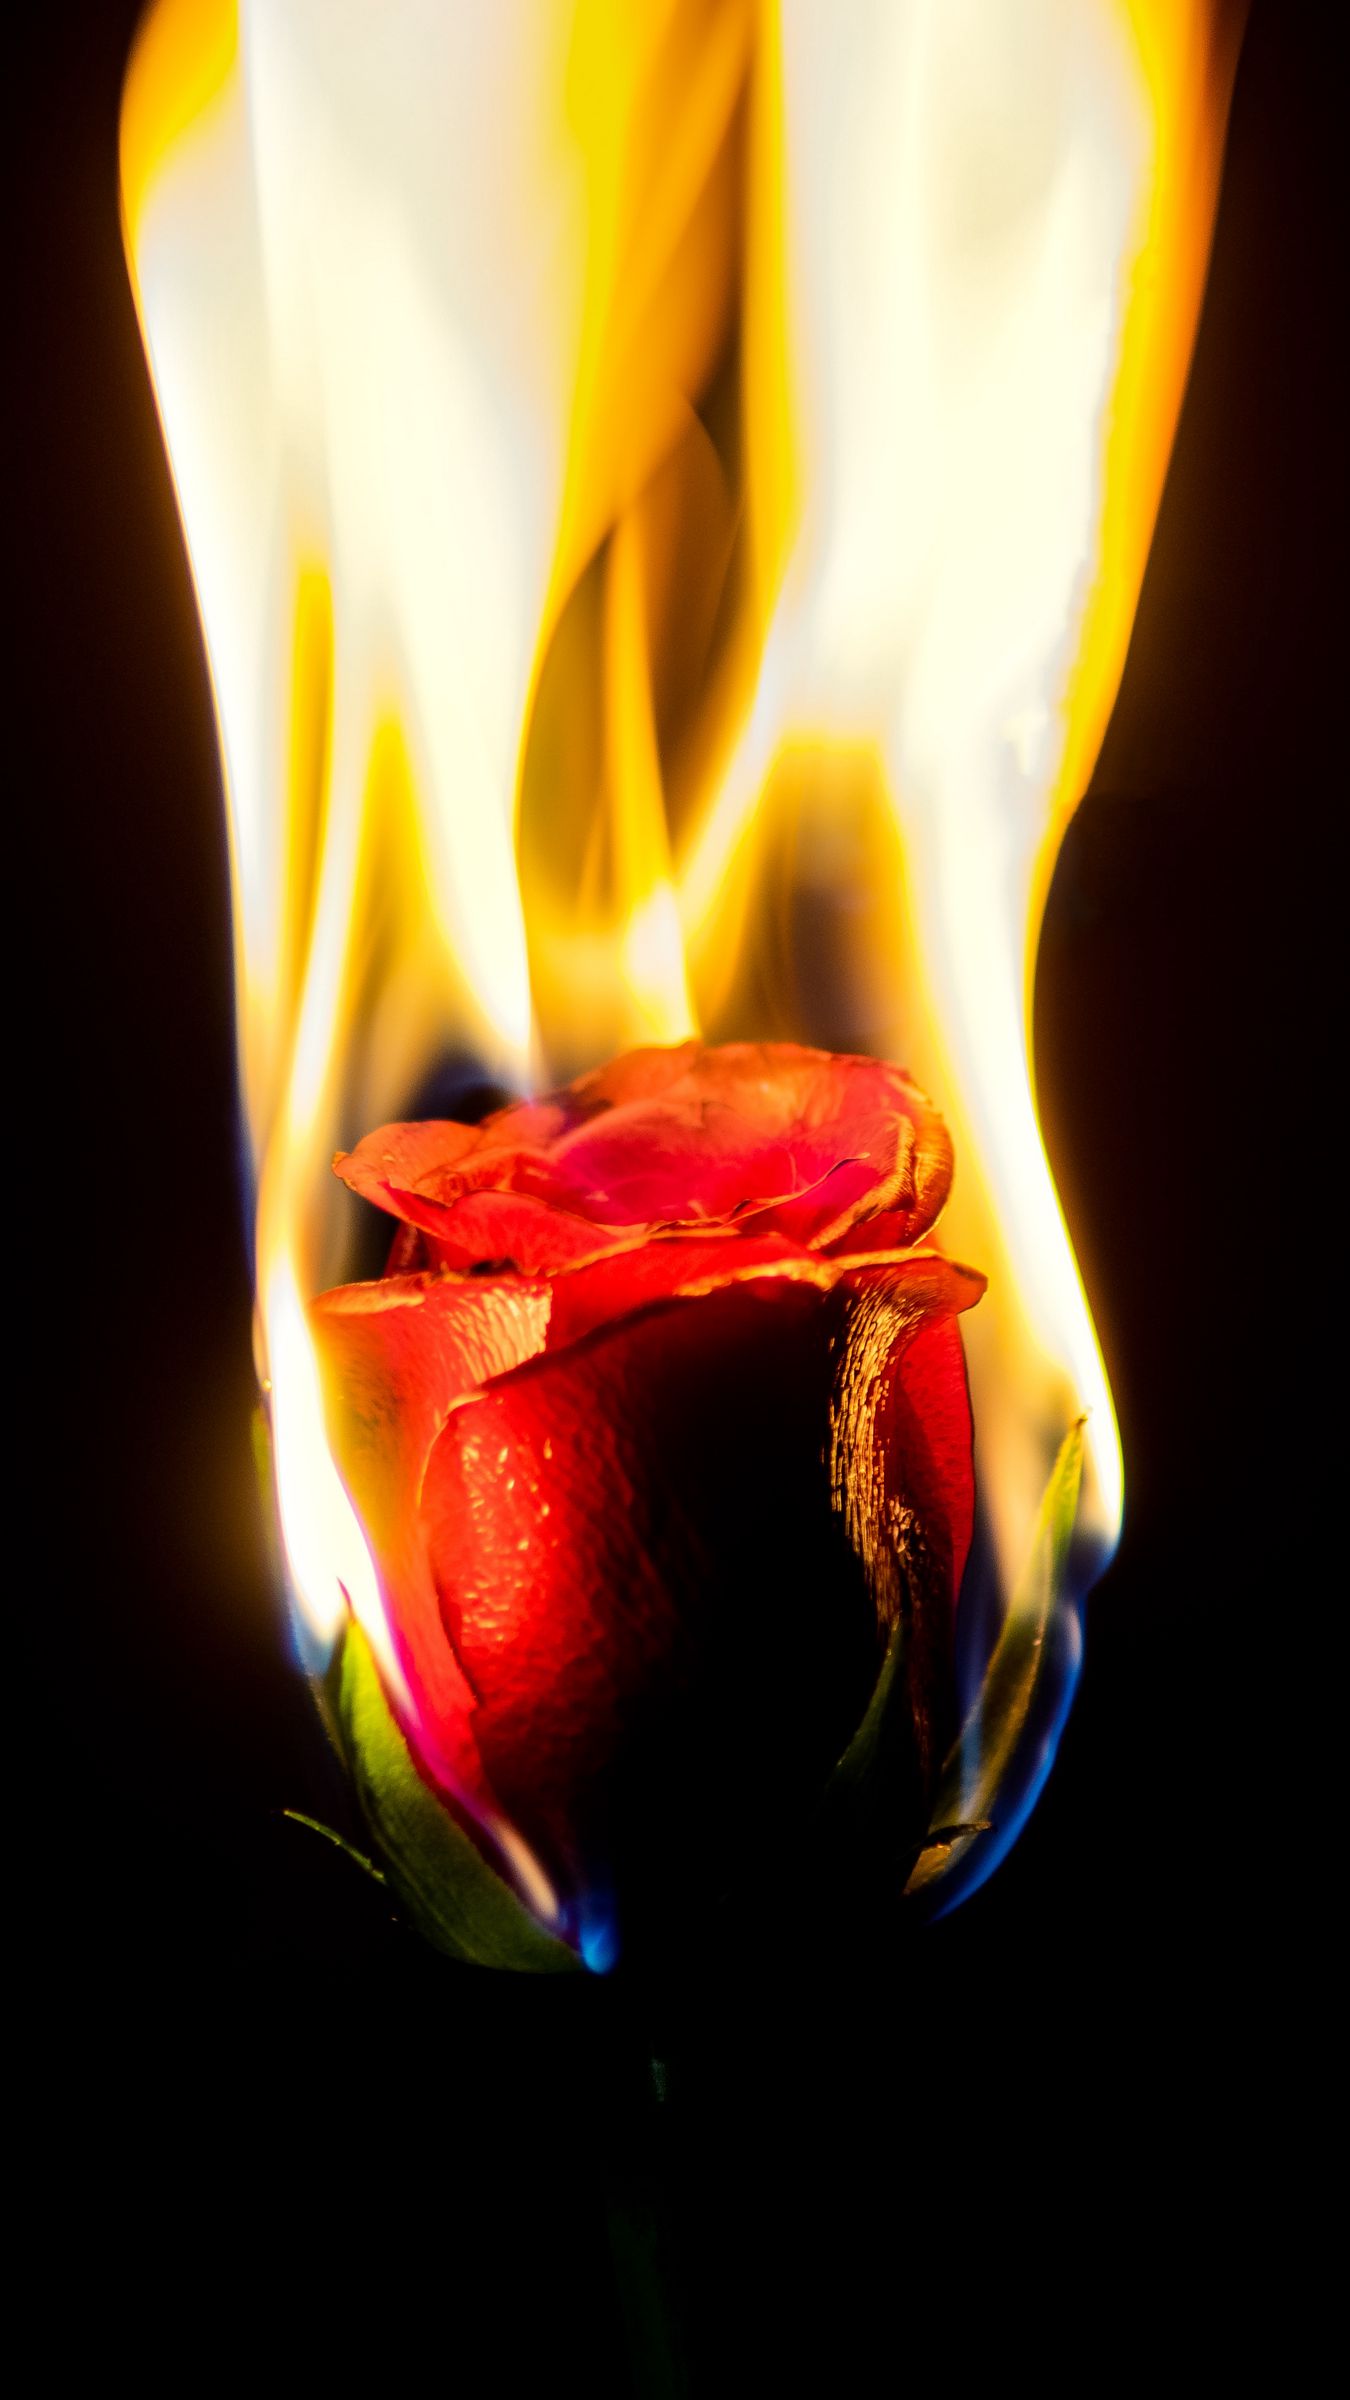 Fire rose wallpaper for desktop free image   1236